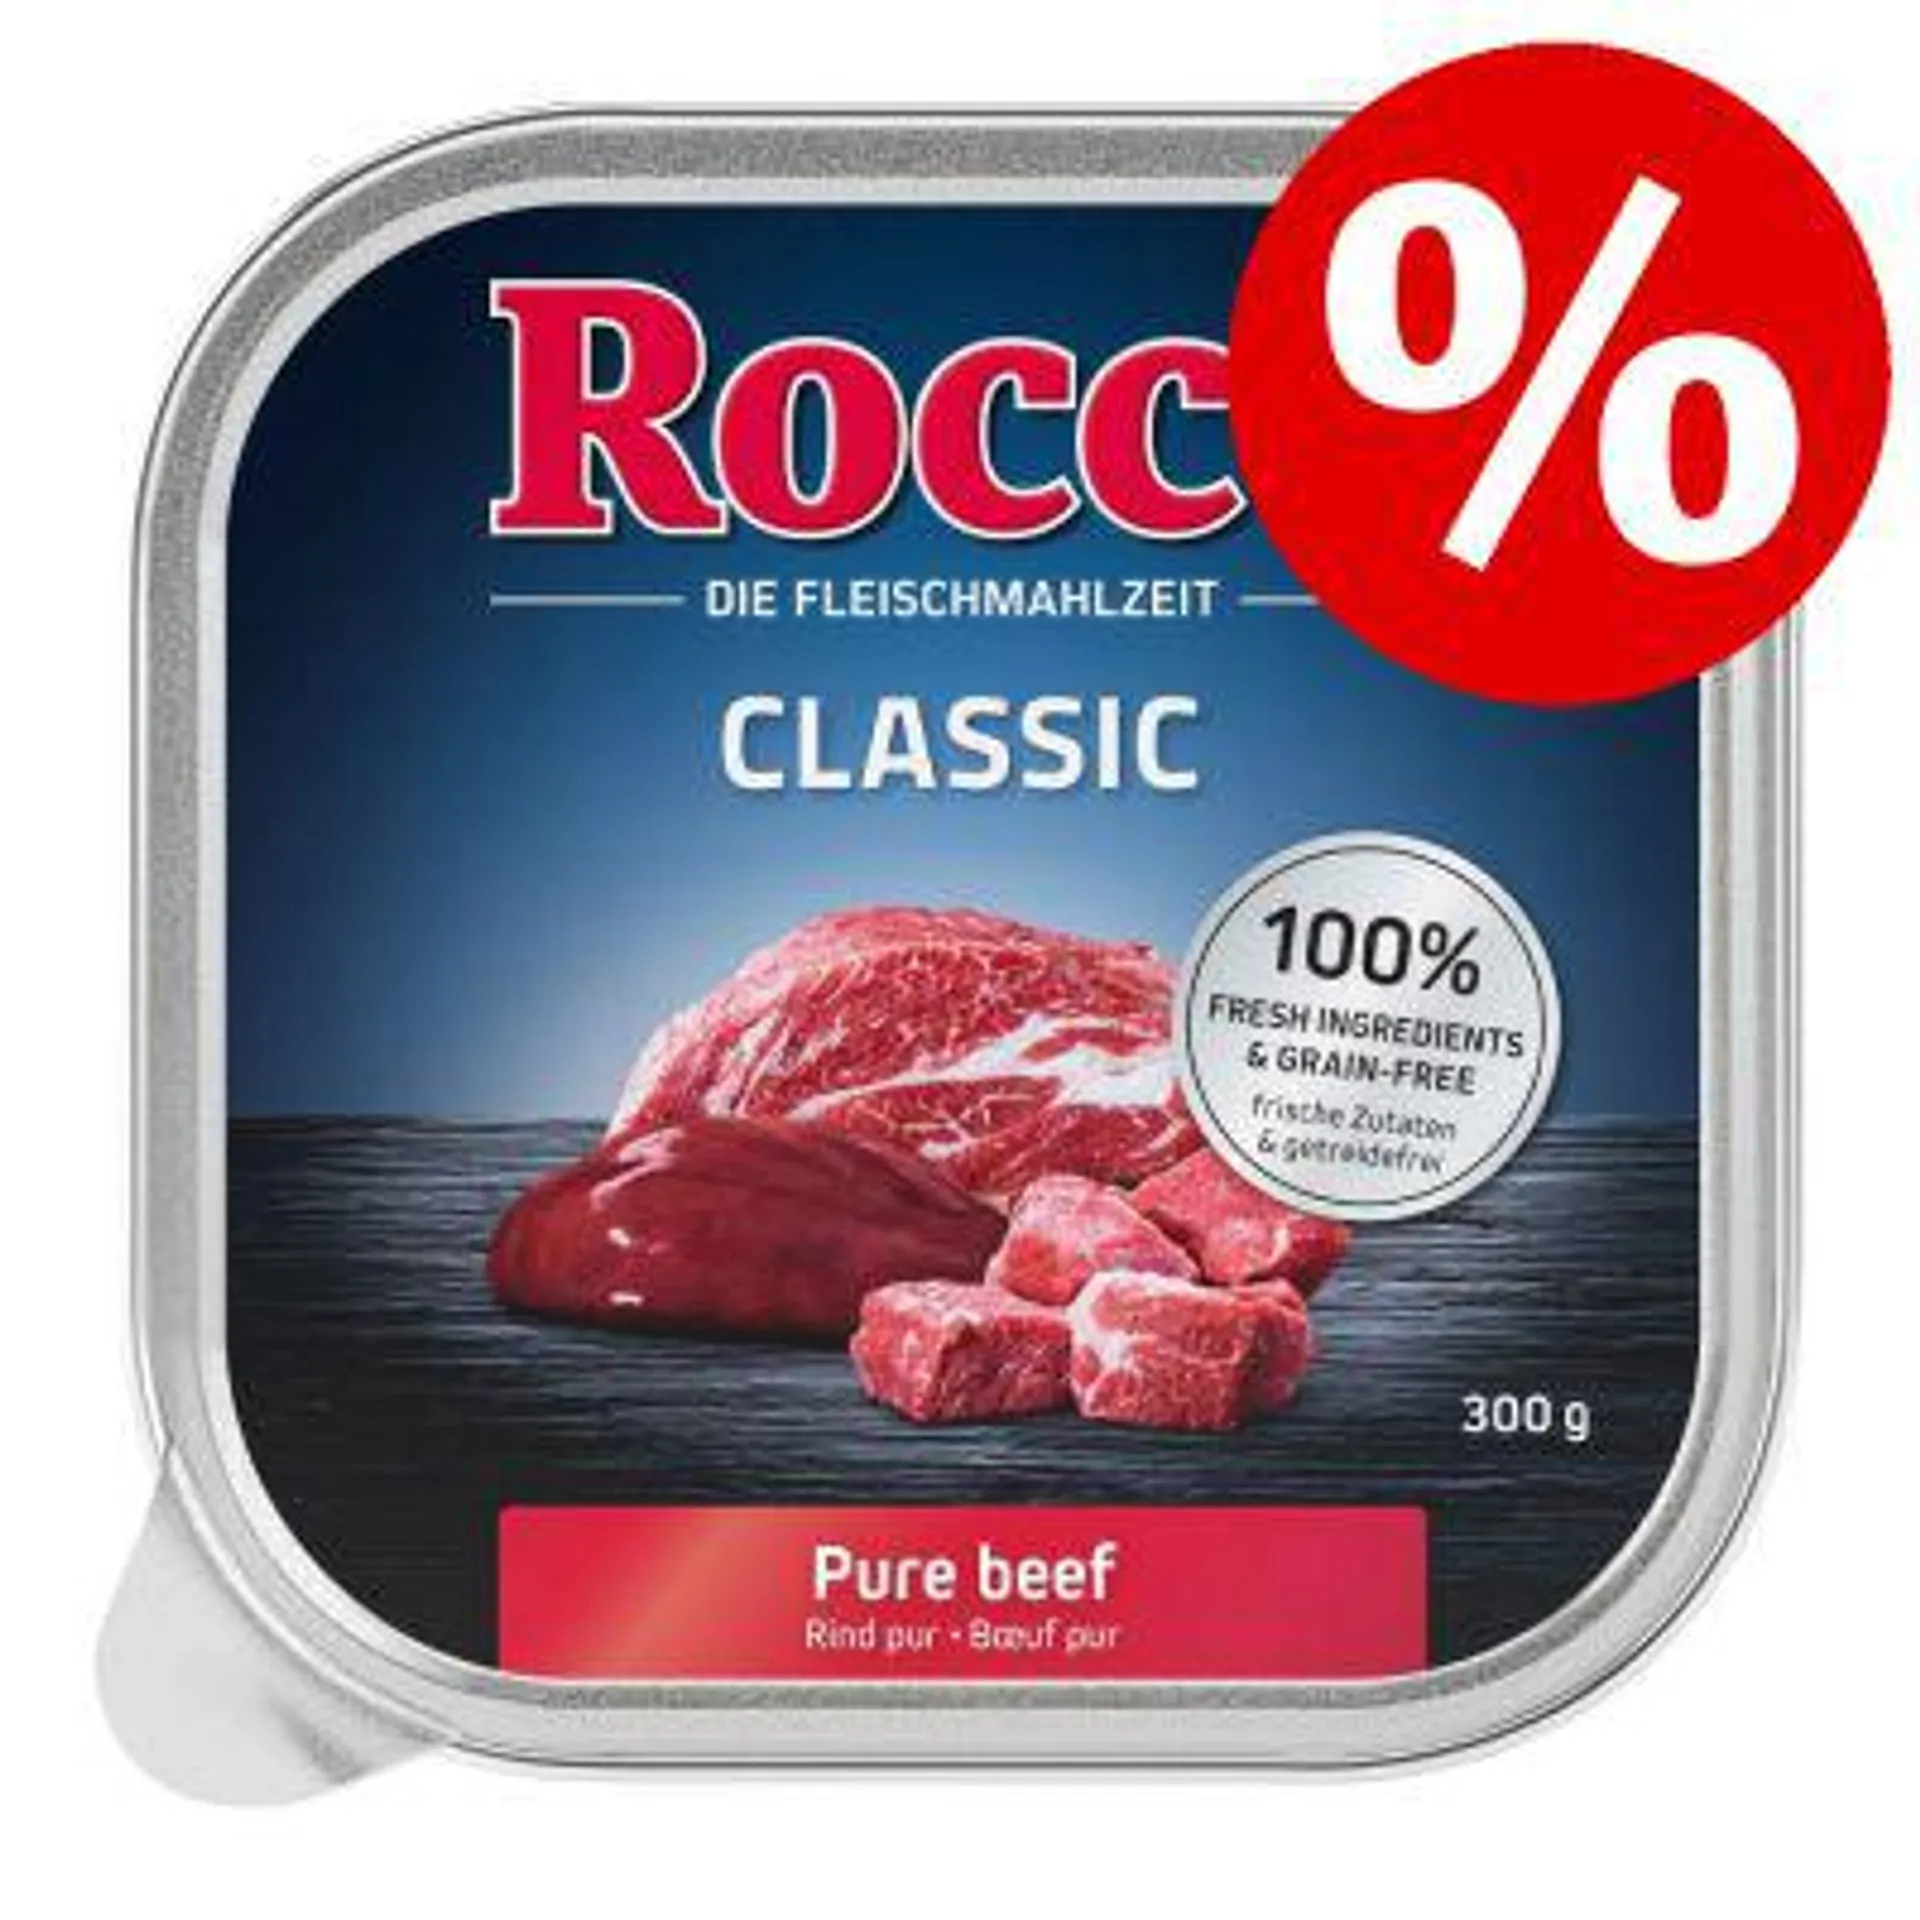 9 x 300g Rocco Classic & Menu Trays Wet Dog Food - Special Price!*